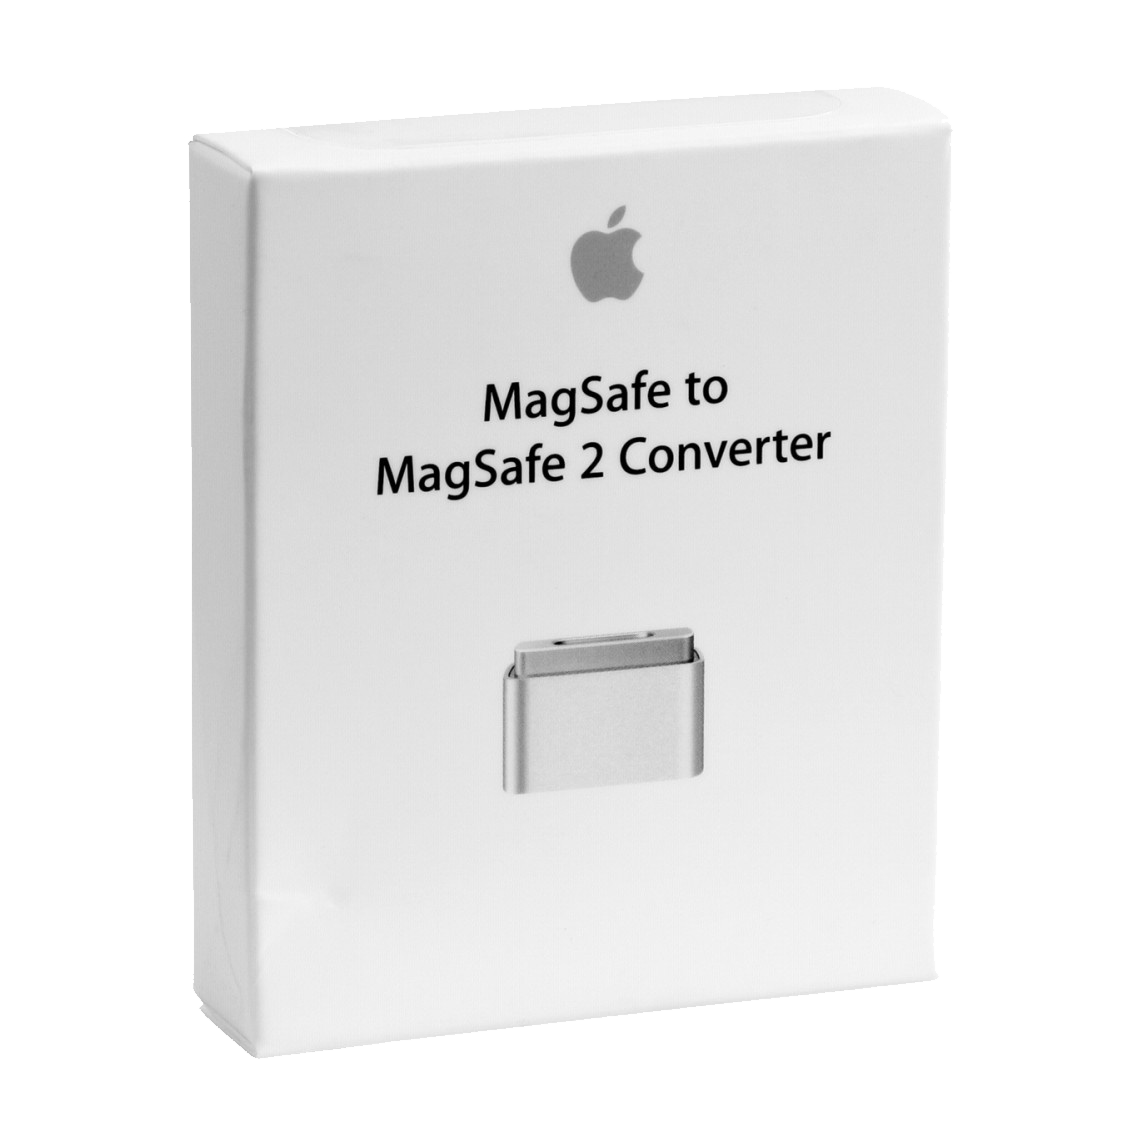 Refurbished MagSafe to MagSafe 2 Converter